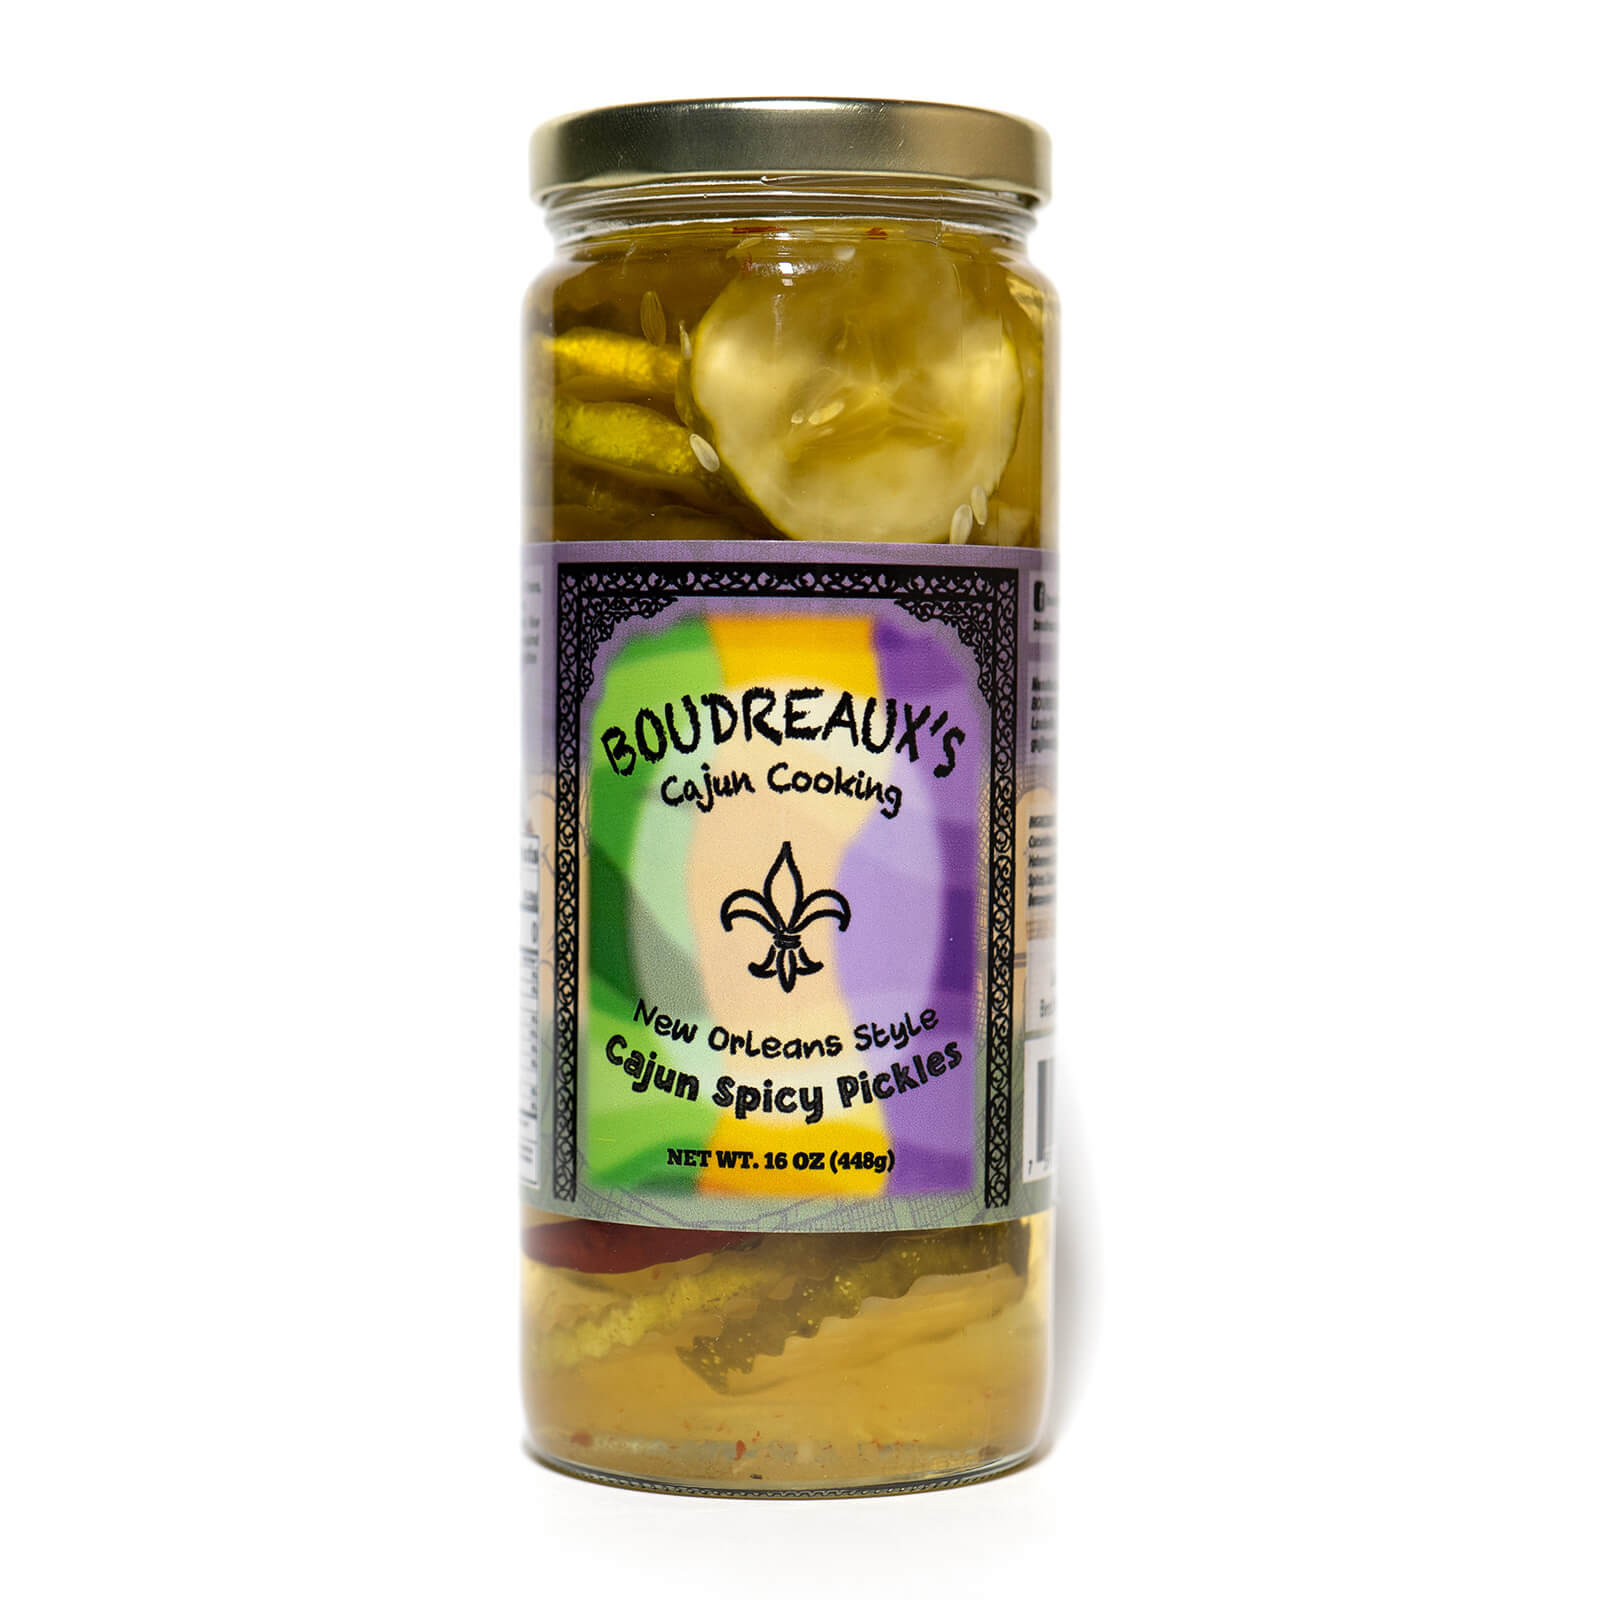 New Orleans Style Cajun Spicy Pickles - Boudreaux's Cajun Cooking - Single Jar - Front Label